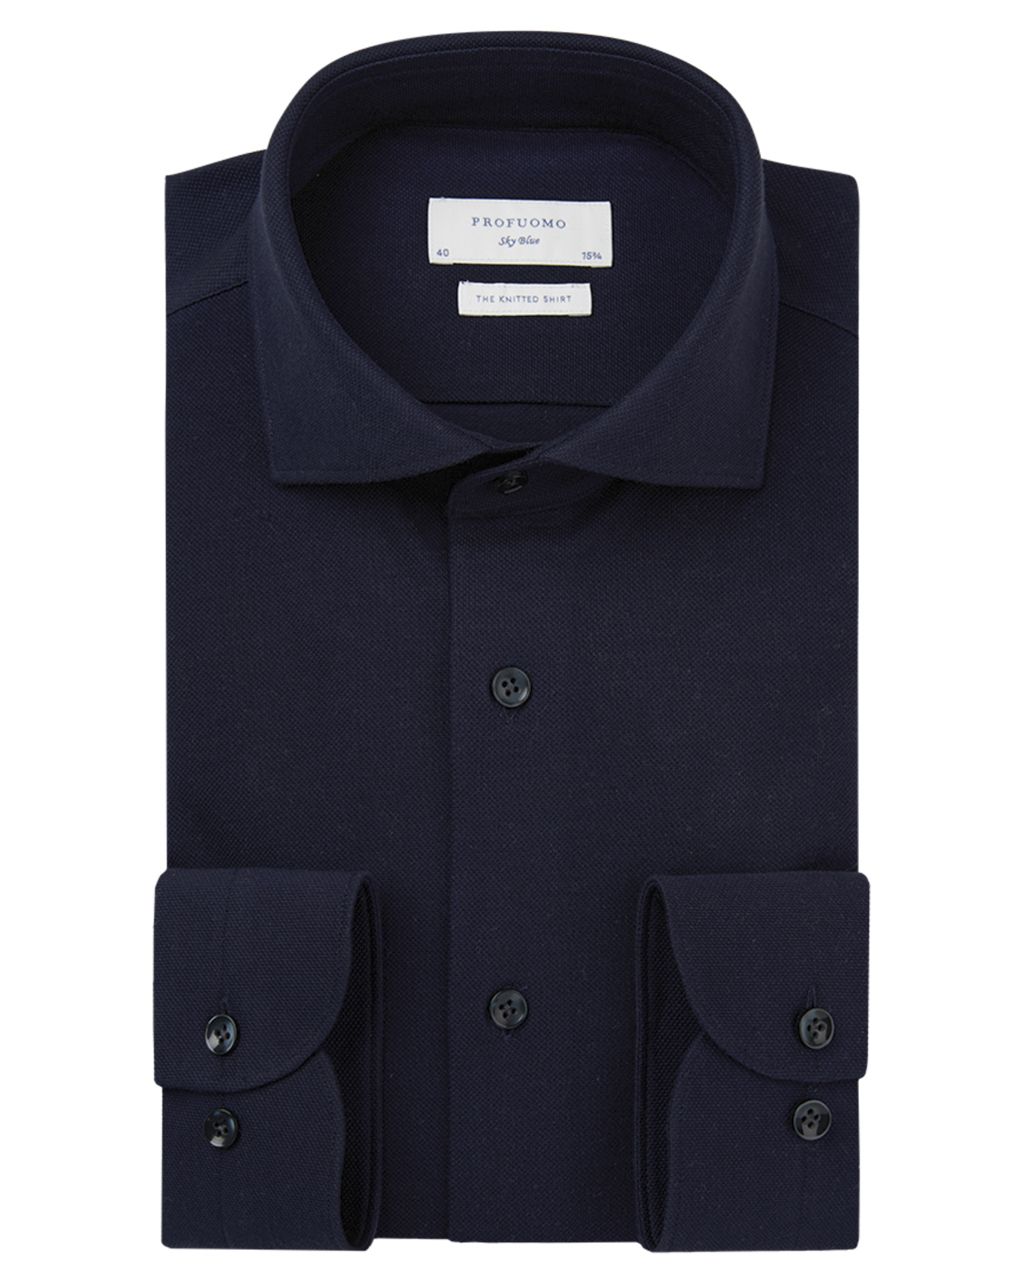 Profuomo Knitted Mercerised Overhemd LM Blauw 071479-001-39